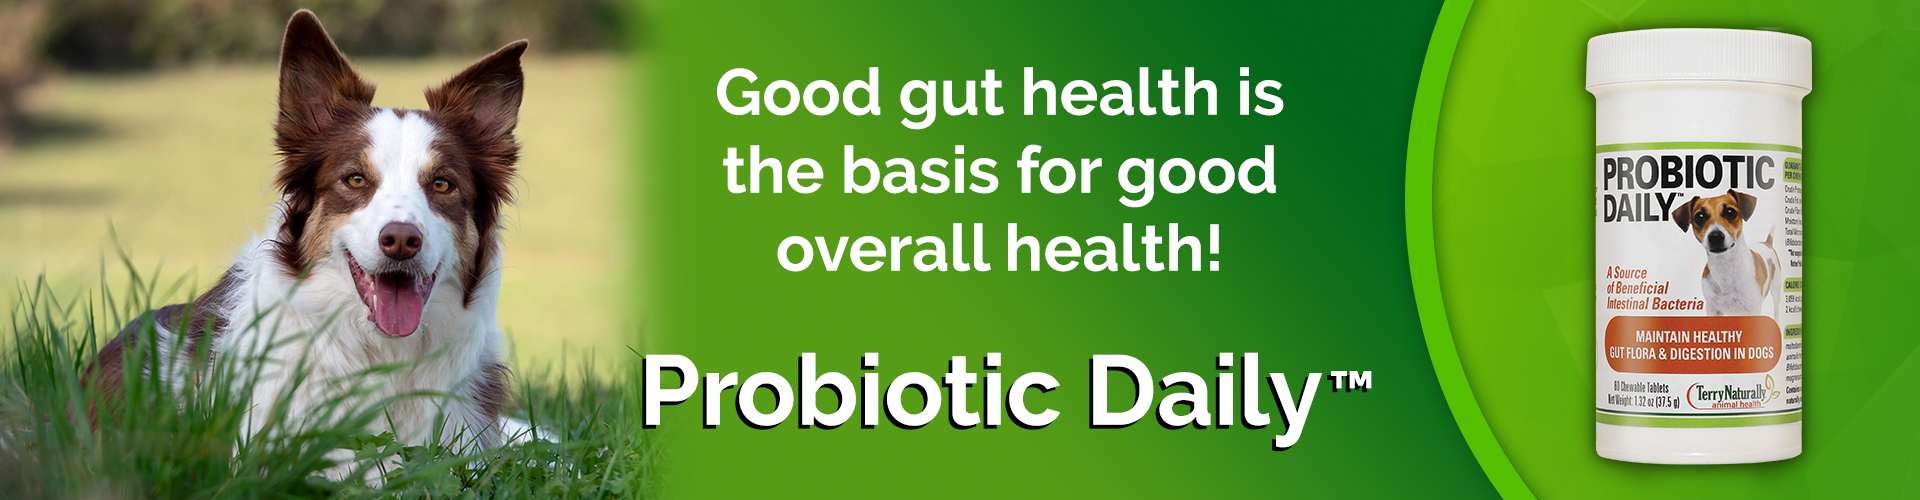 Good gut health is the basis for good overall health!